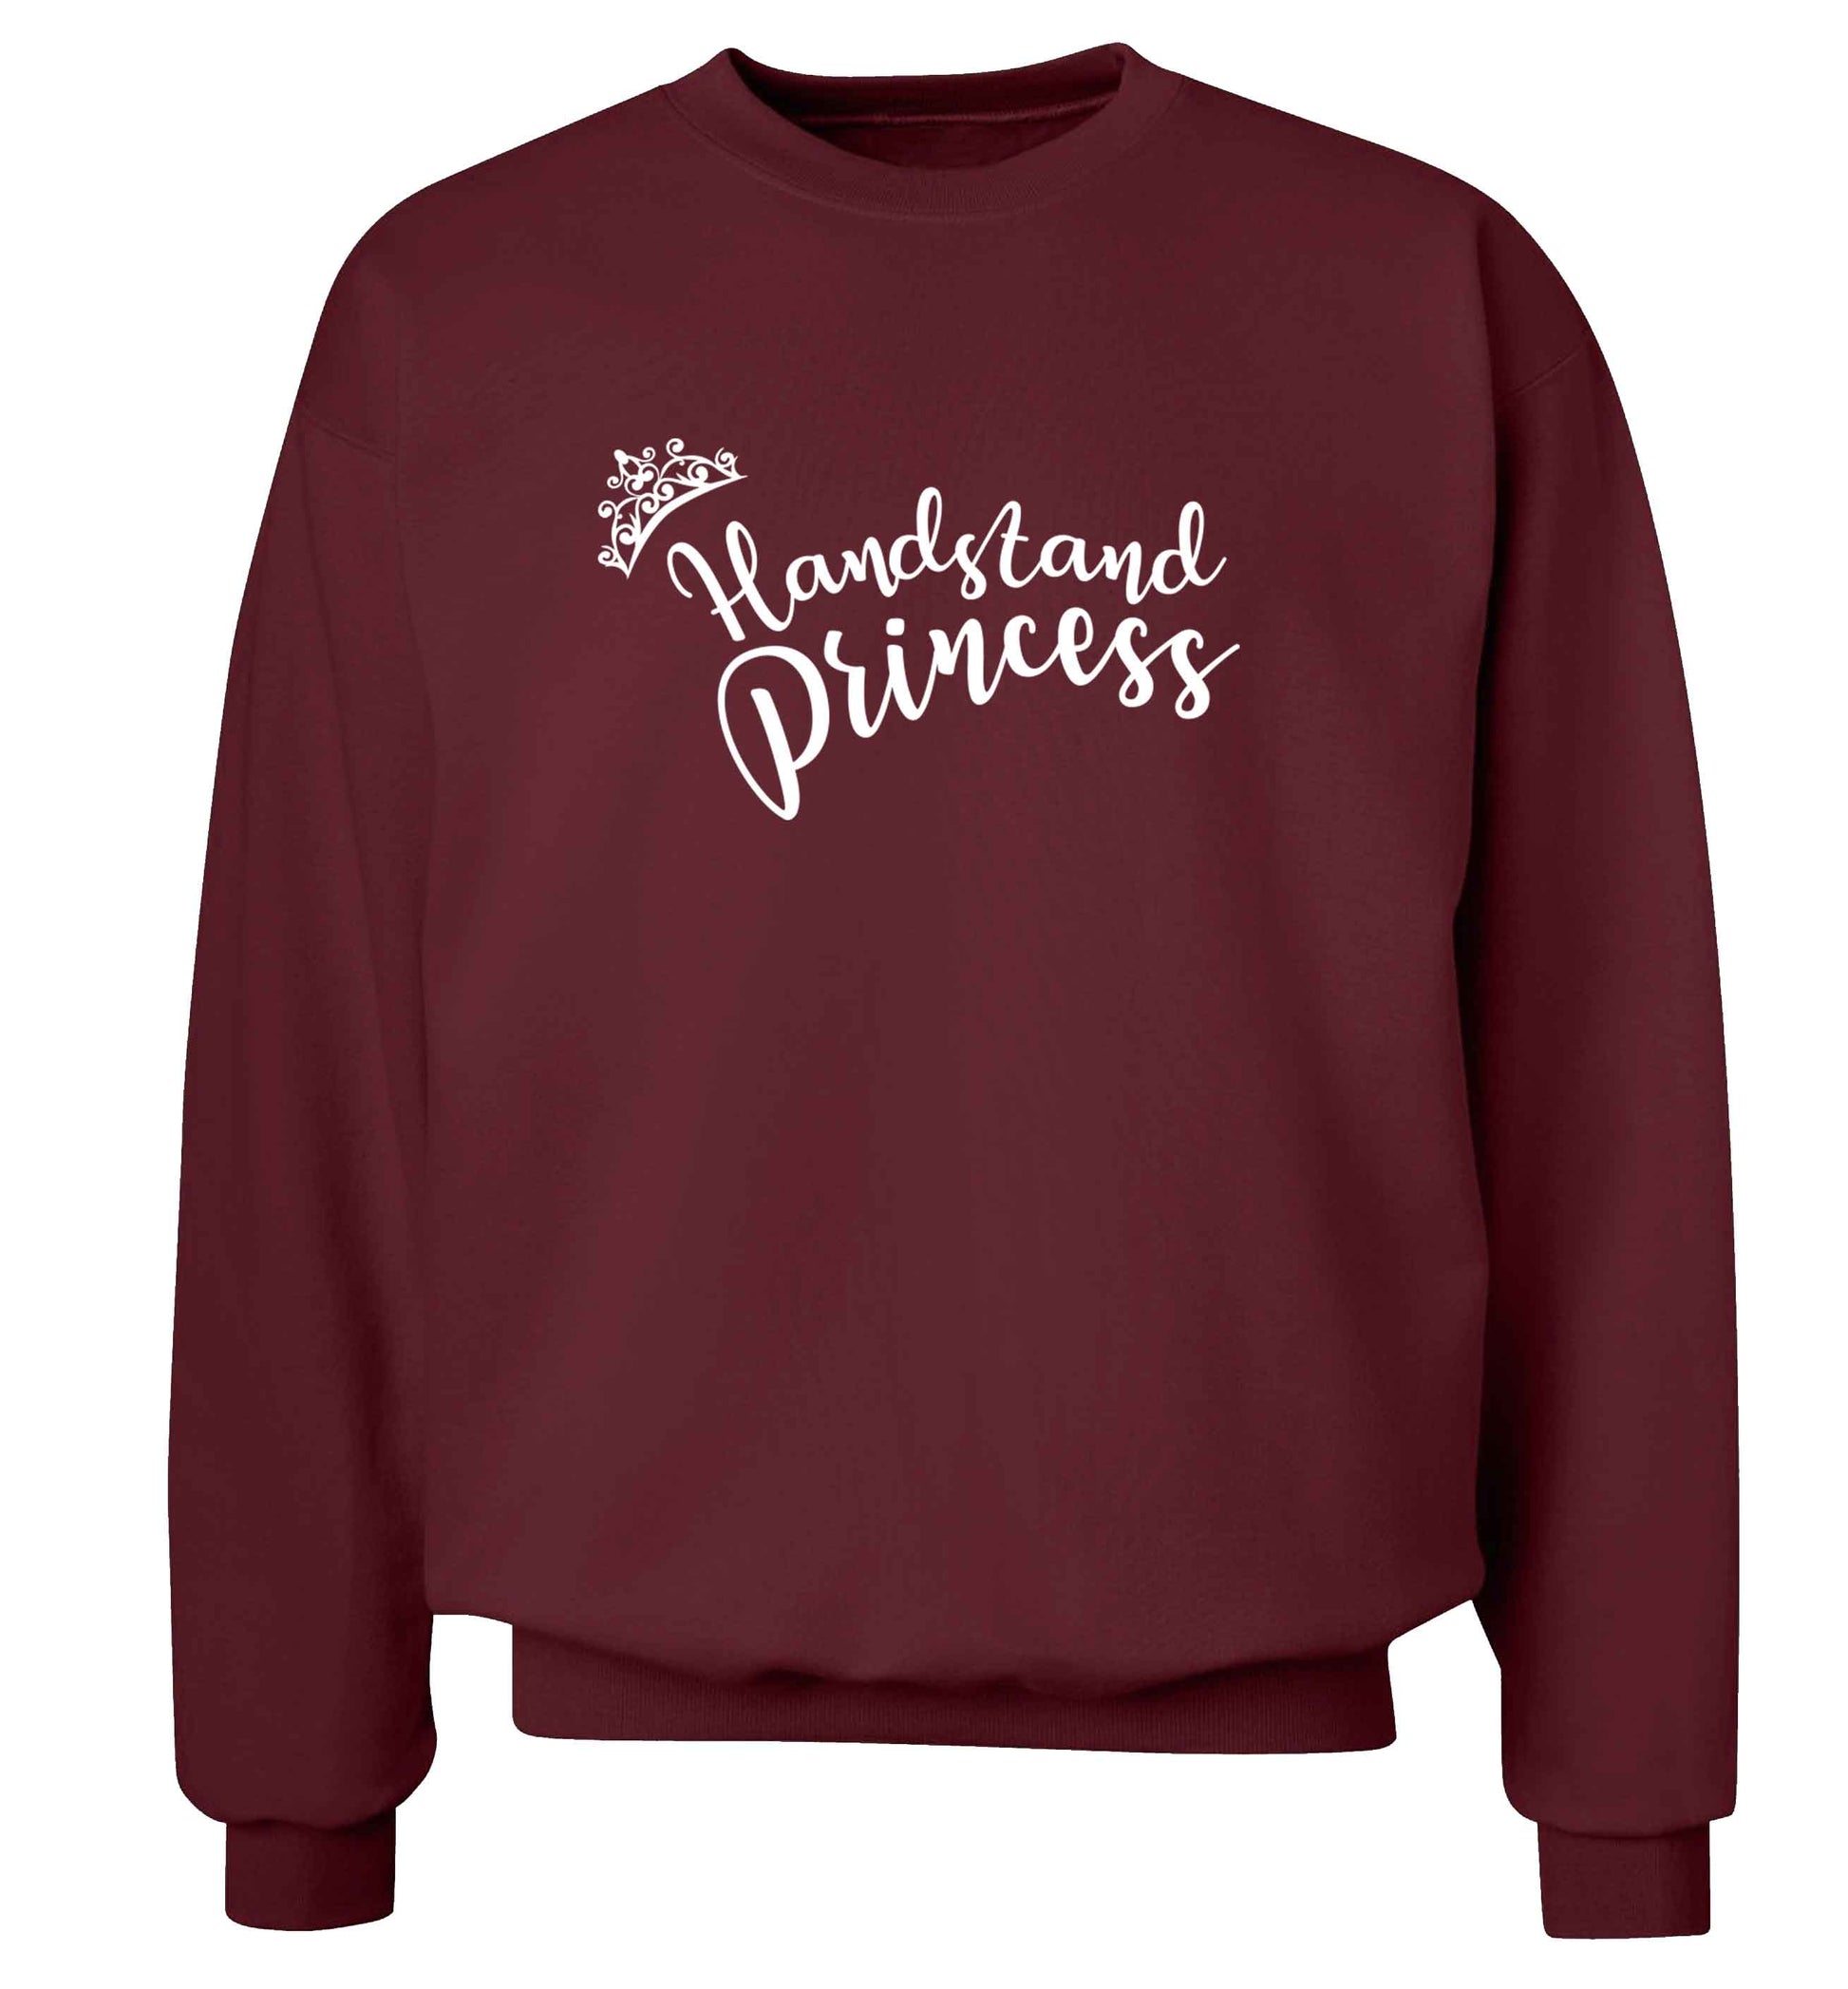 Handstand princess Adult's unisex maroon Sweater 2XL